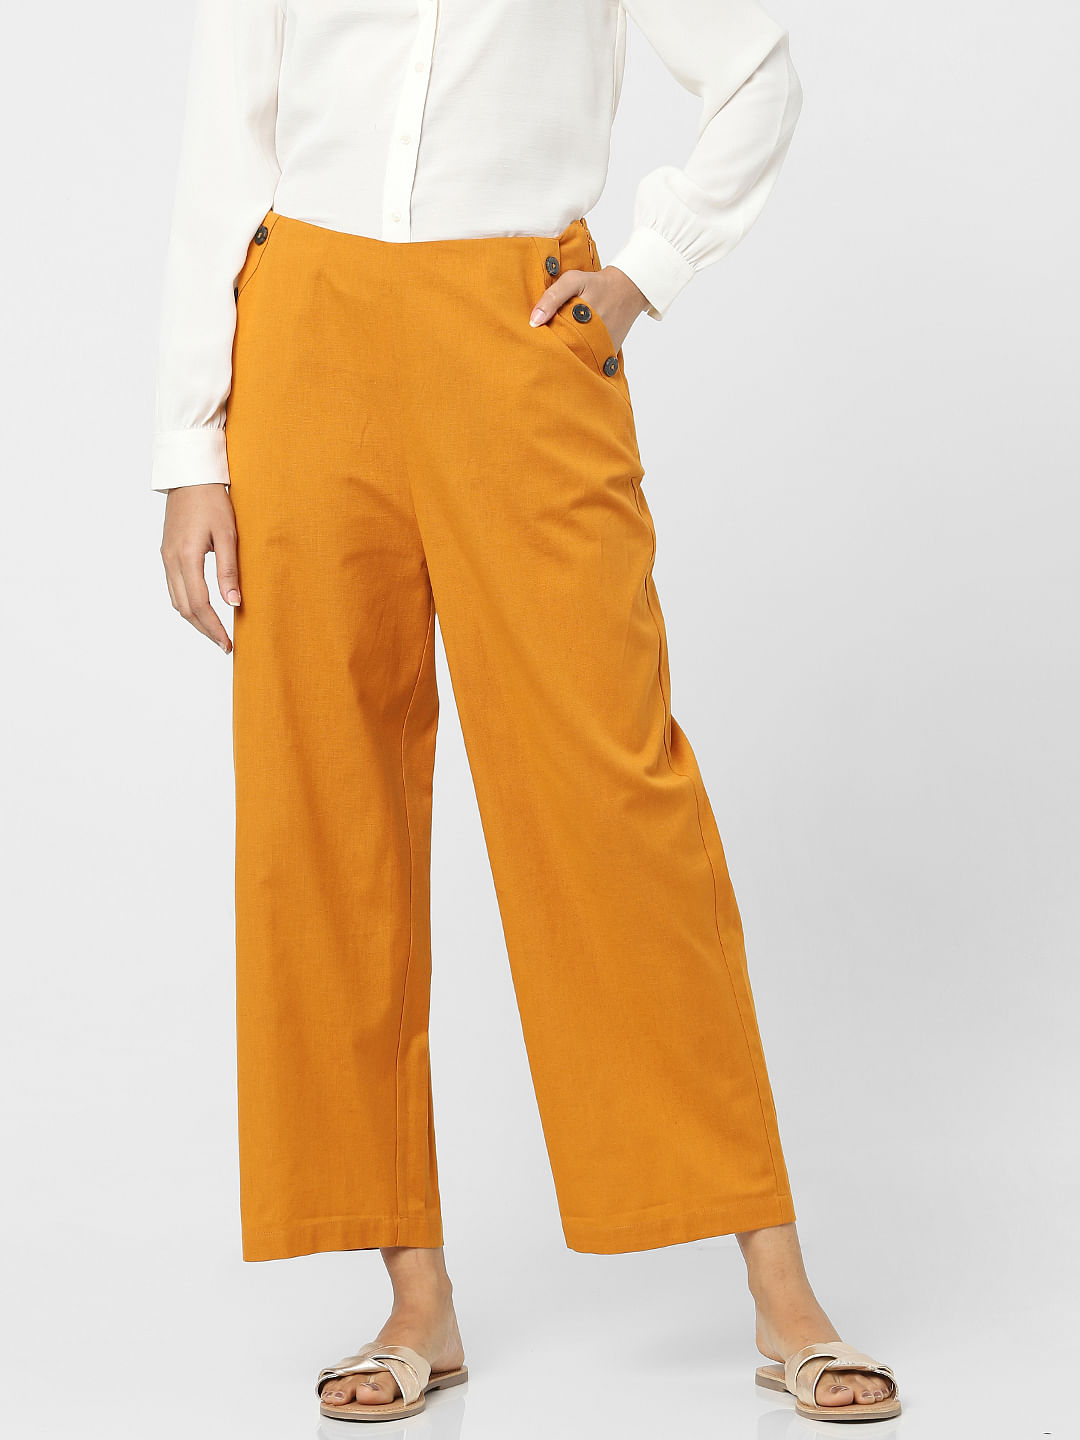 Women's Boho Flowy Yellow Pants | BohoClandestino Wholesale